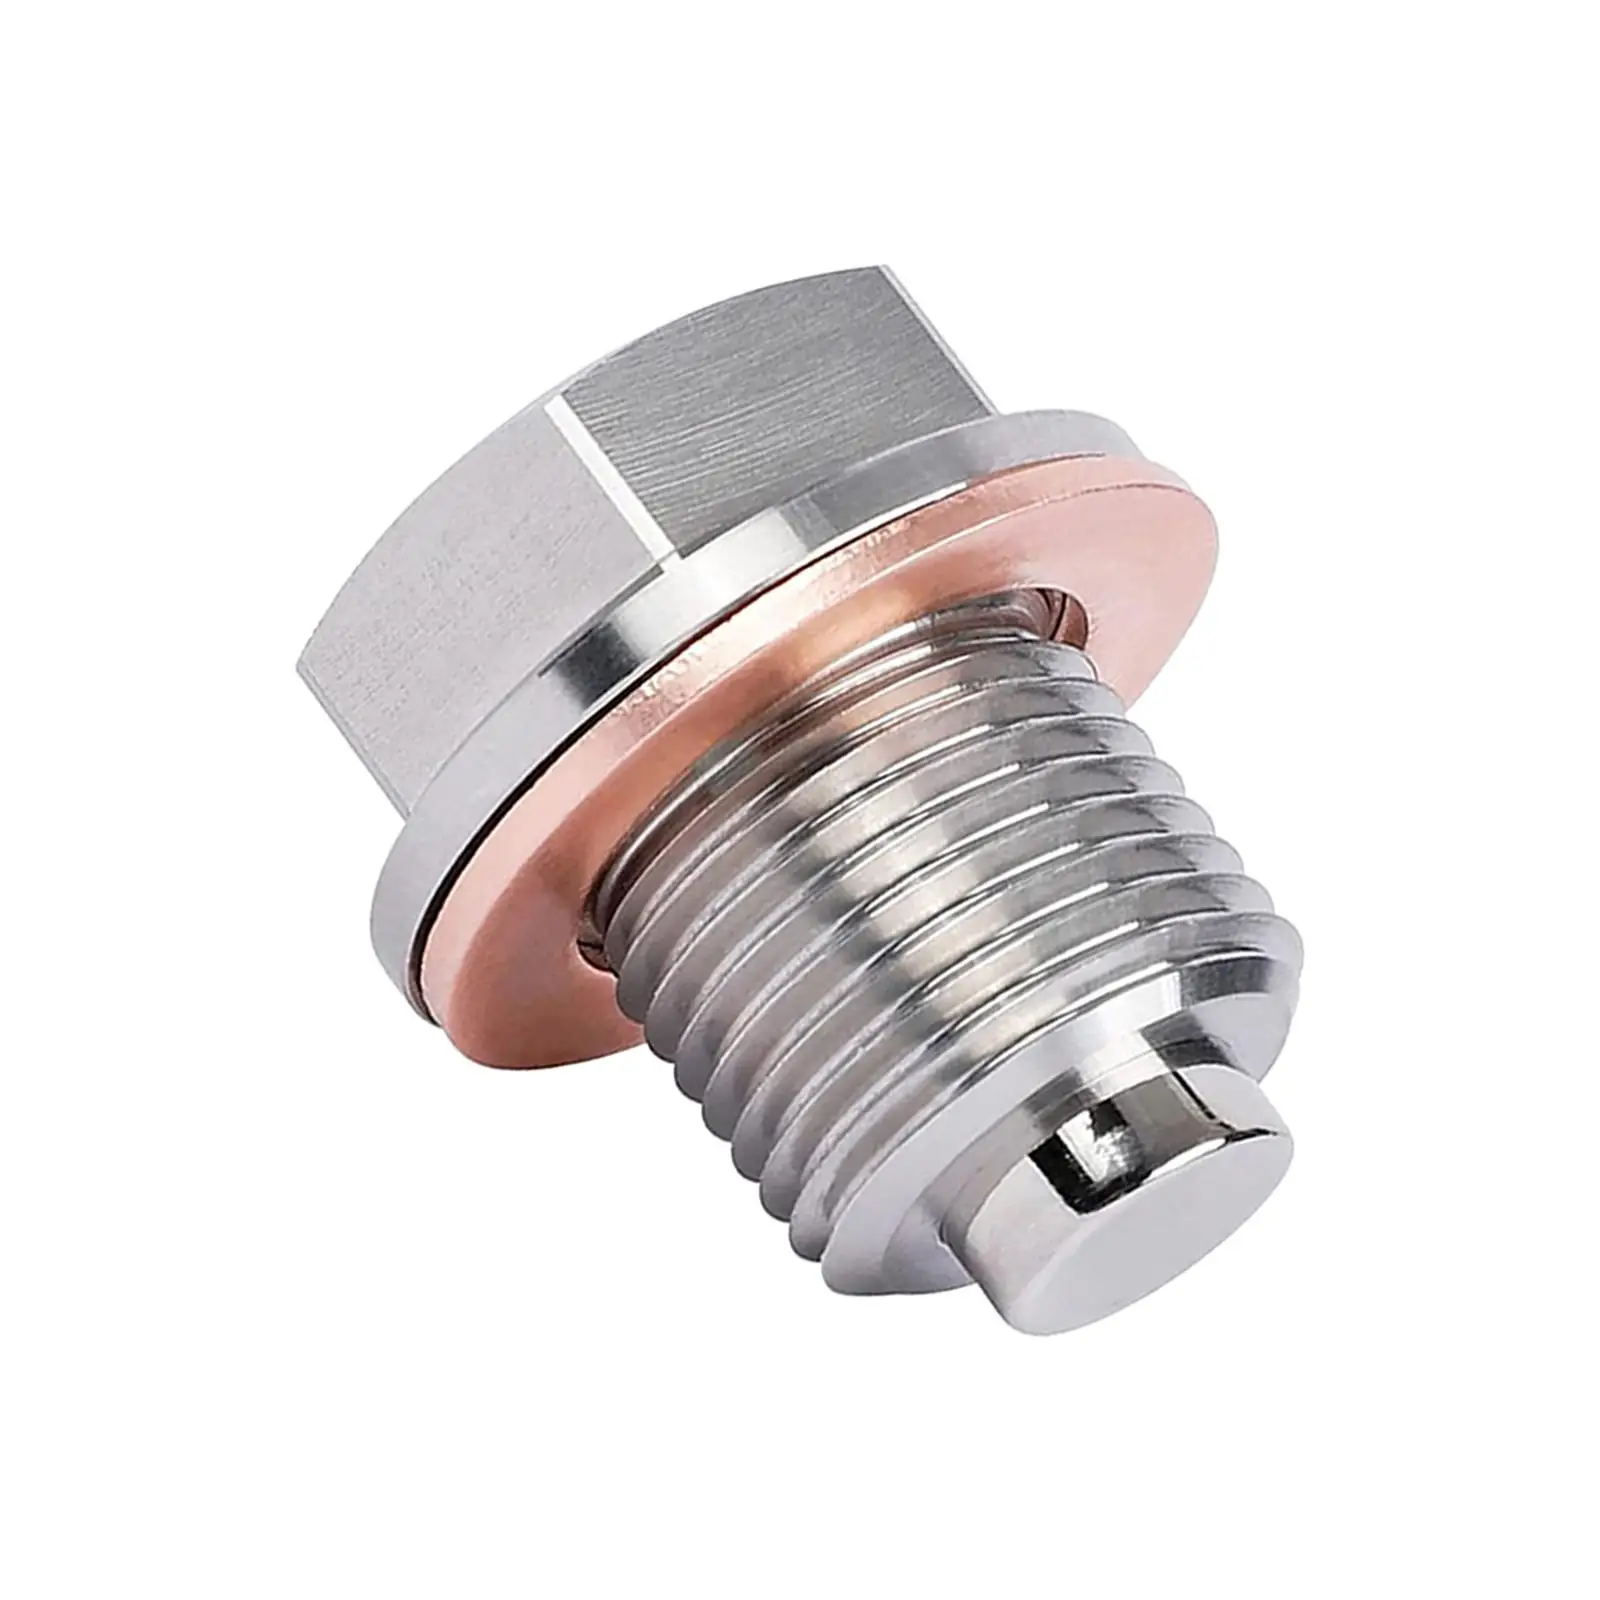 Oil Drain Plug Screw Neodymium Magnet Bolt M16x1.5 Heavy Duty Accessory Replace